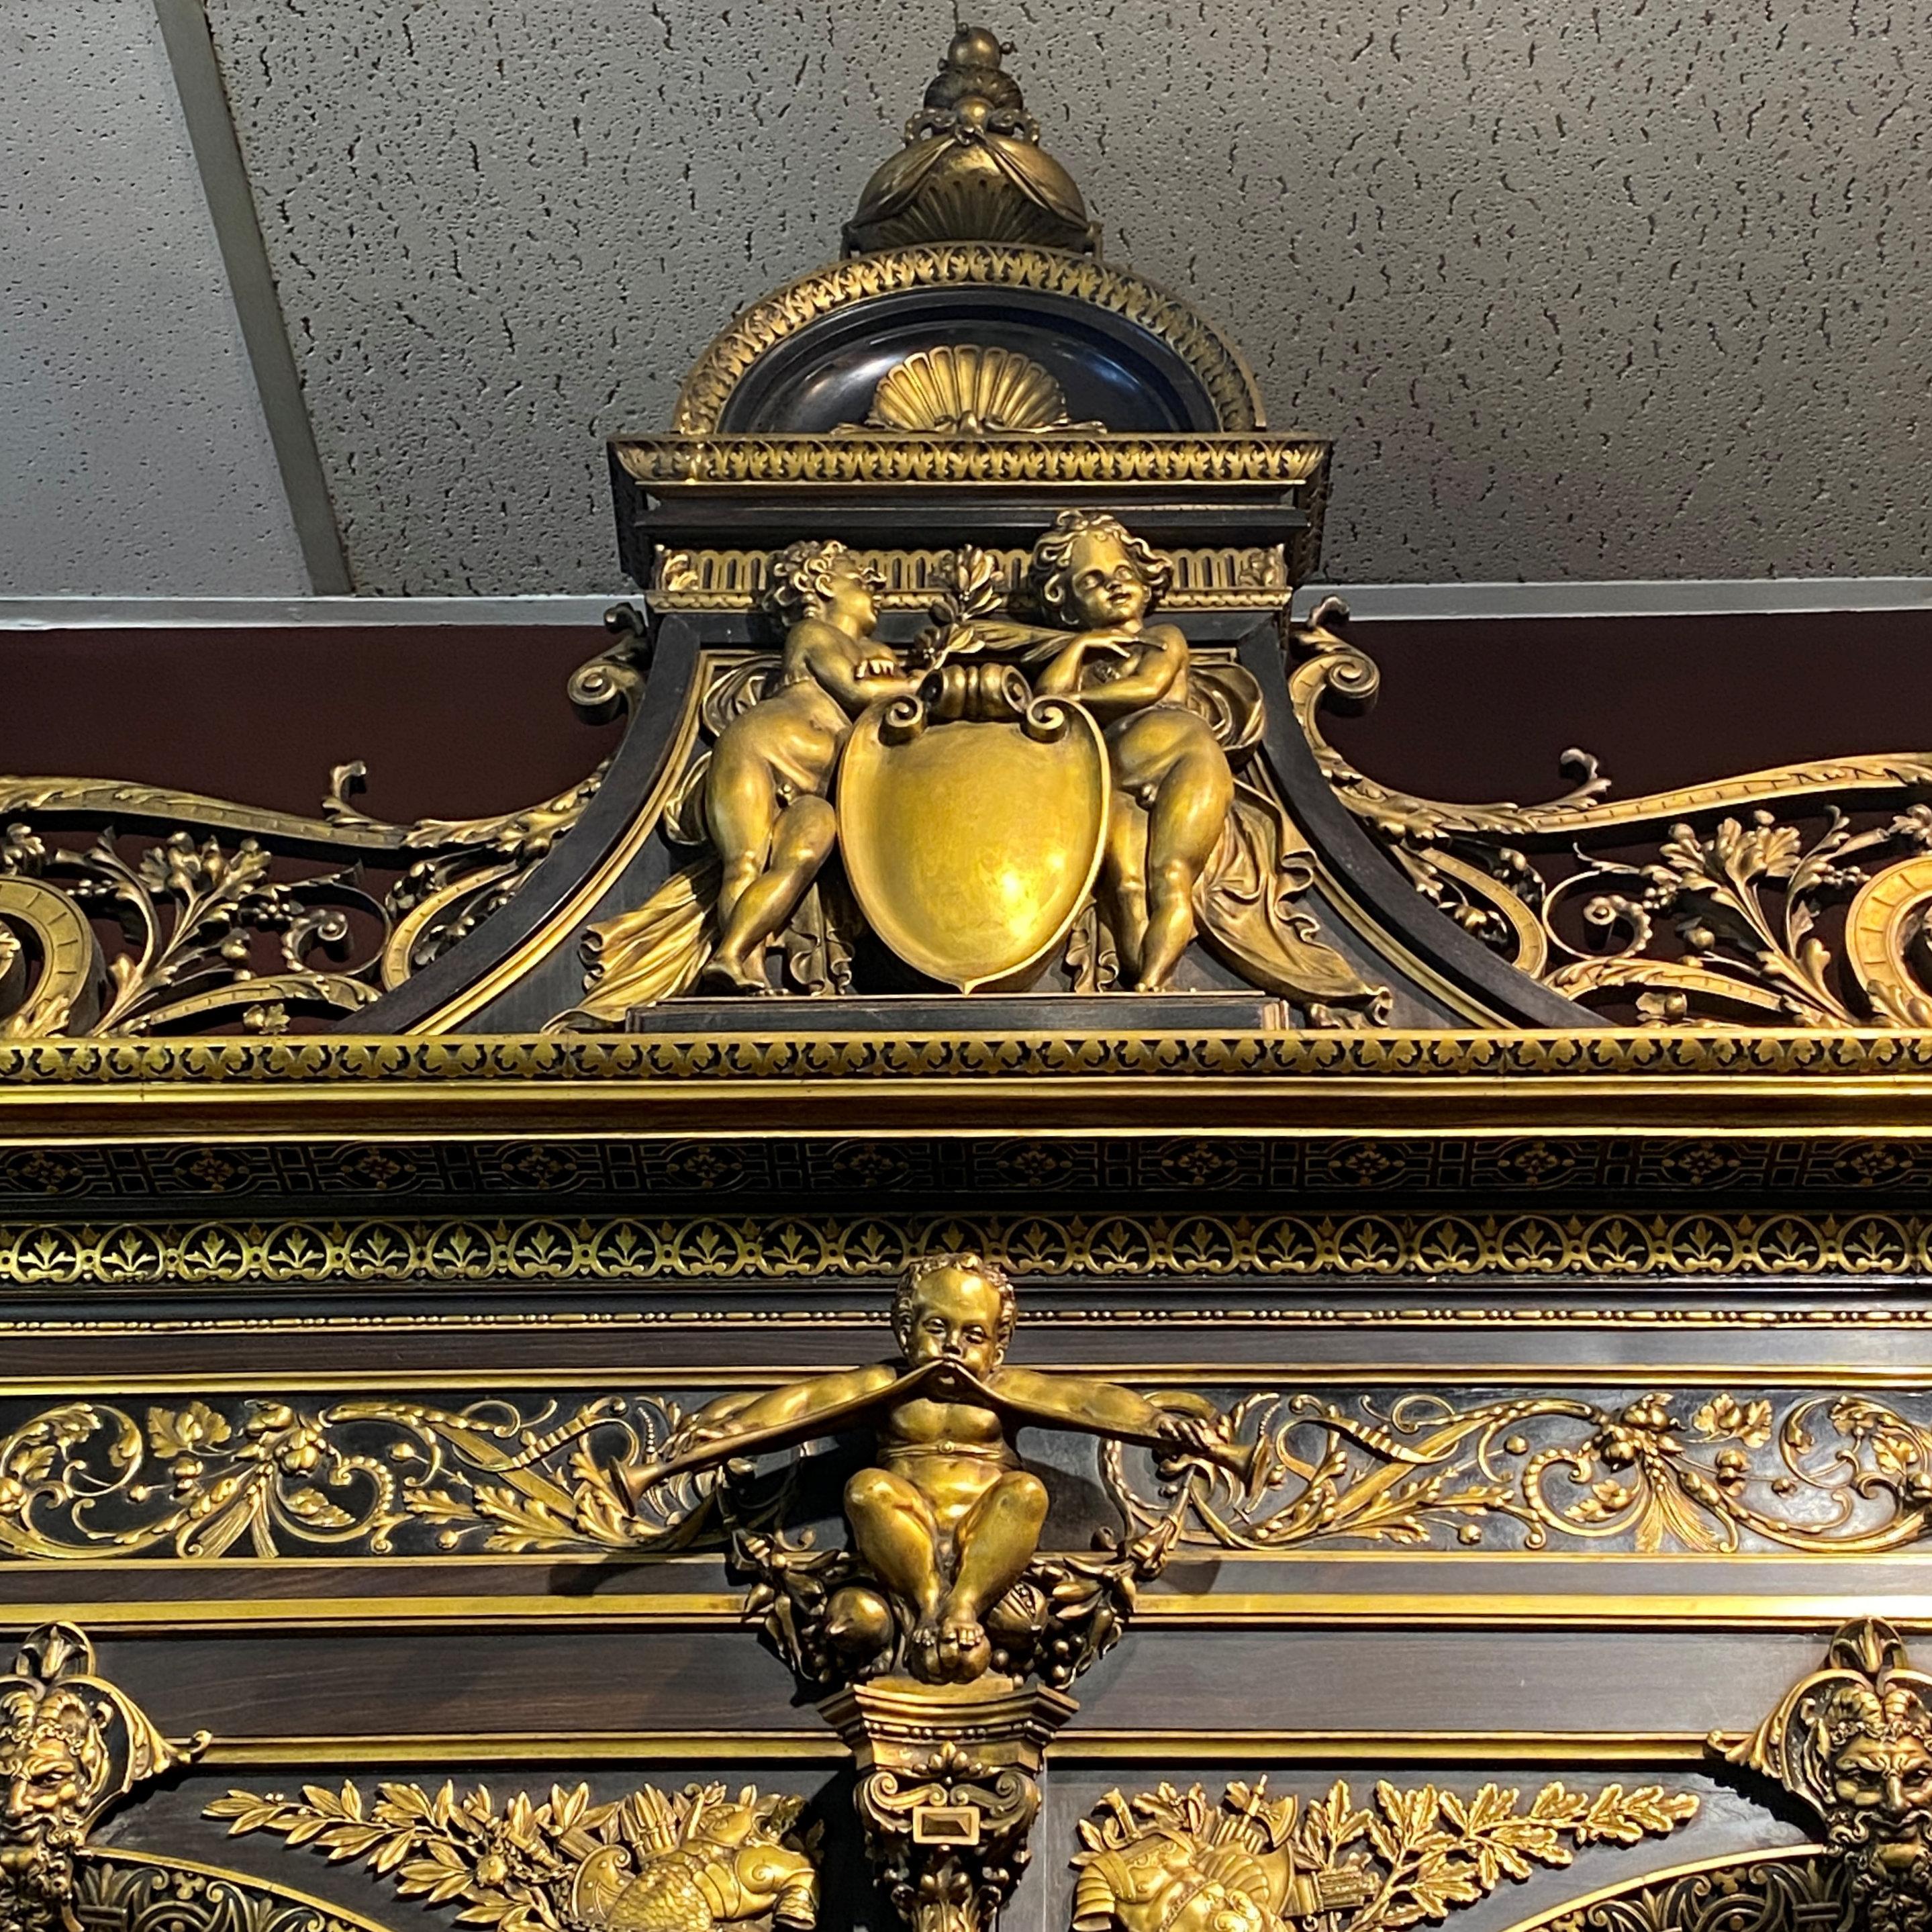 Ebonized Barbedienne Renaissance Cabinet Designed for Great London Exposition